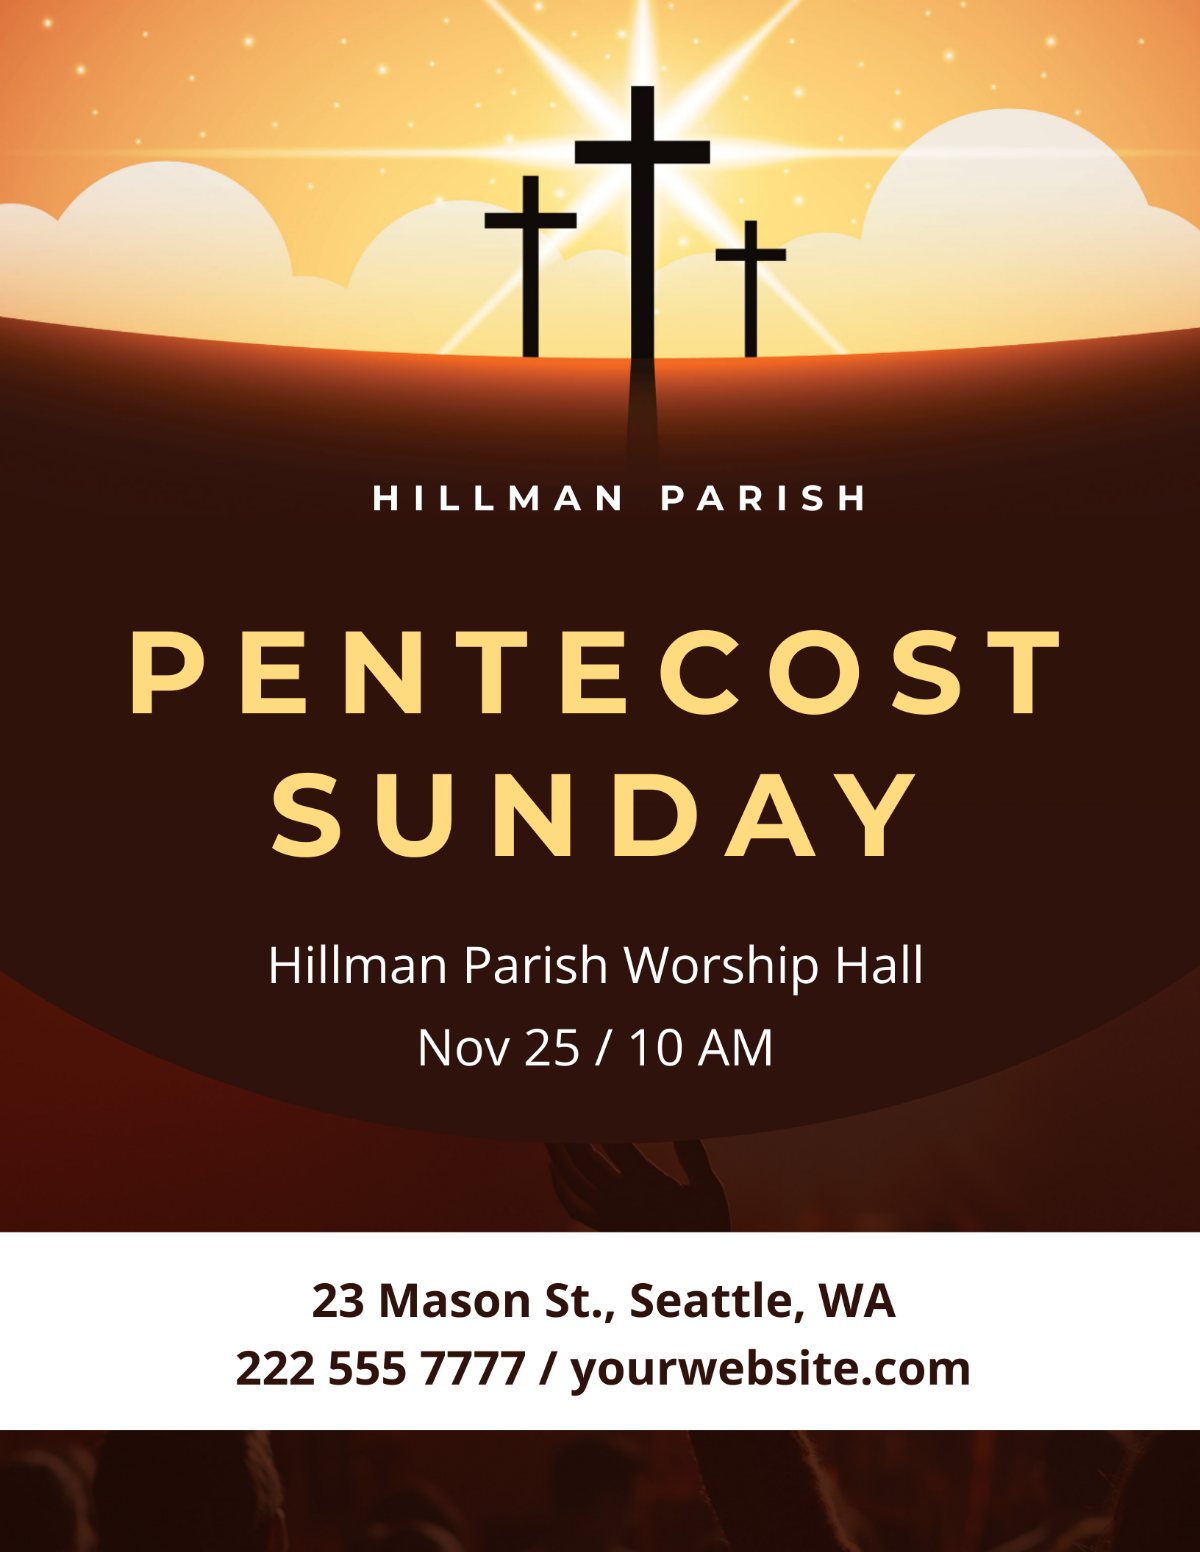 Pentecost Sunday Flyer Template